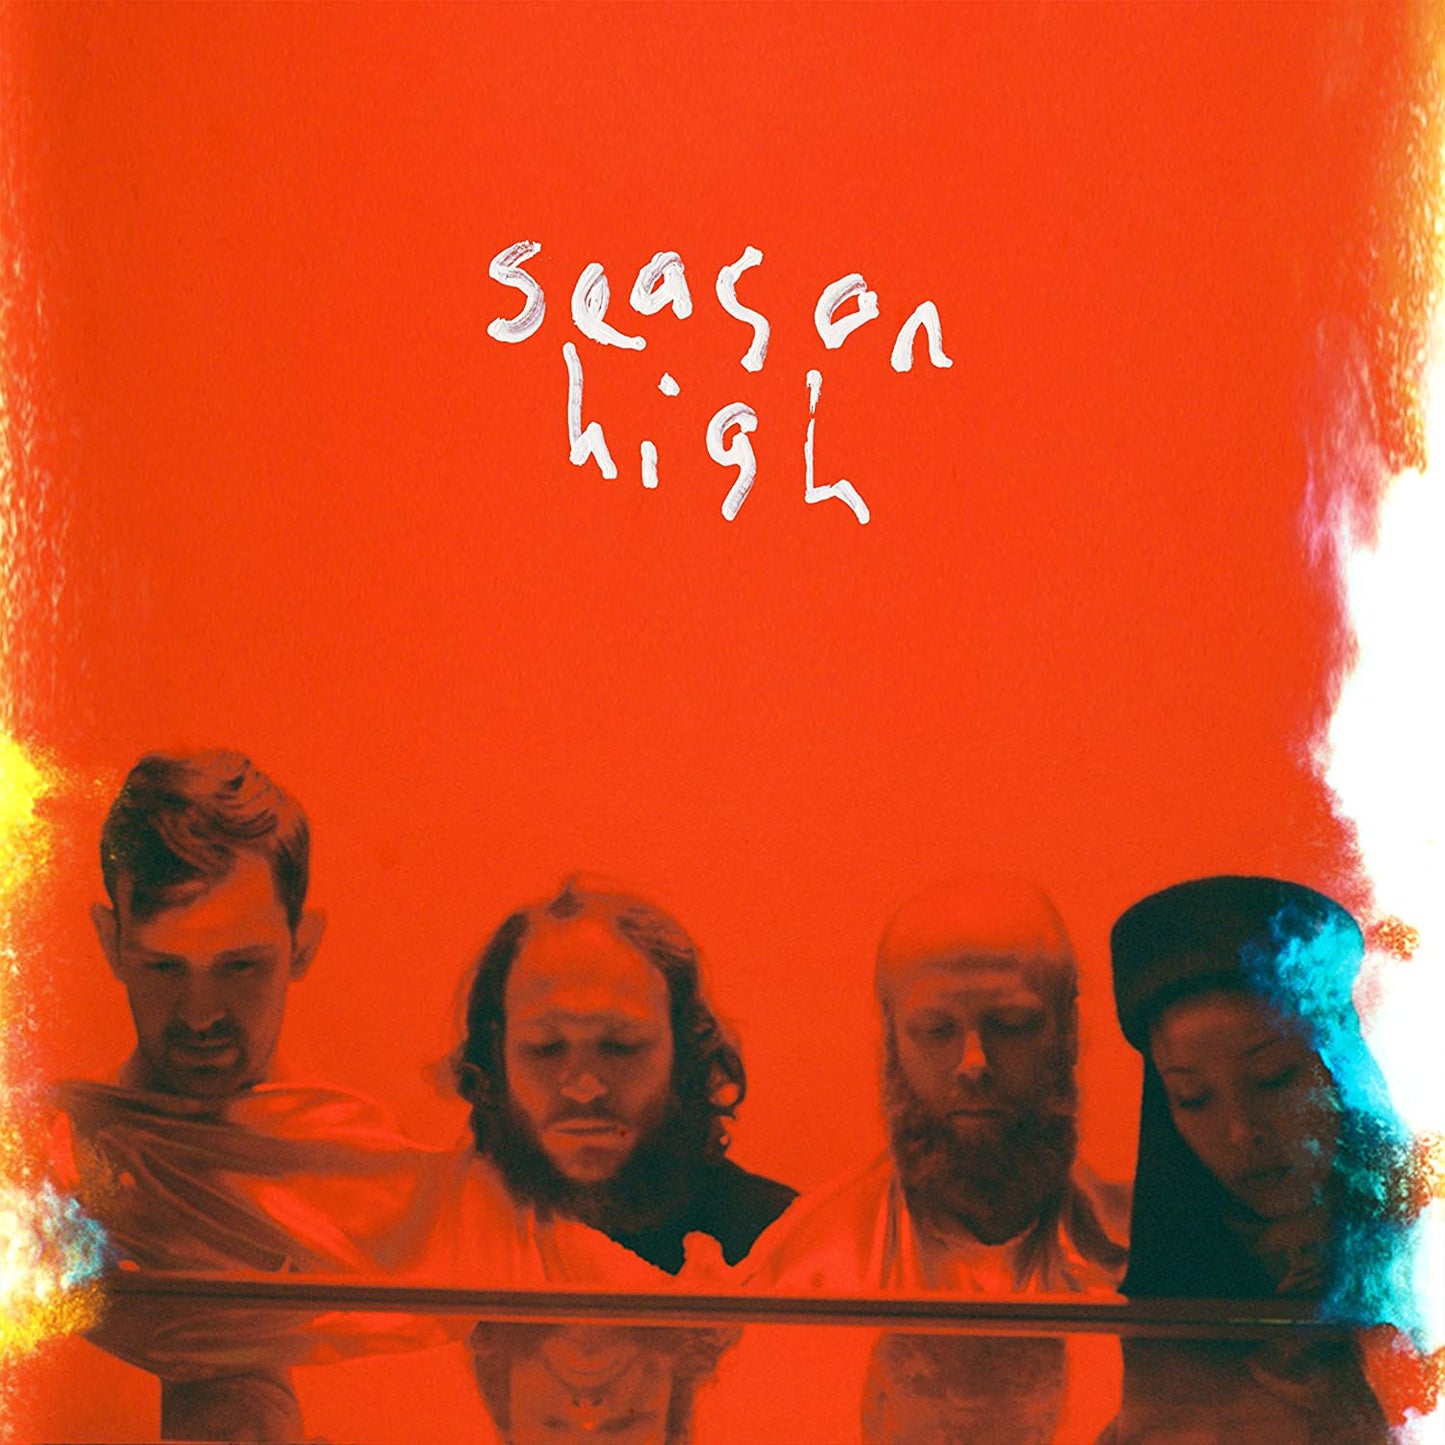 Little Dragon – Season High - USED CD